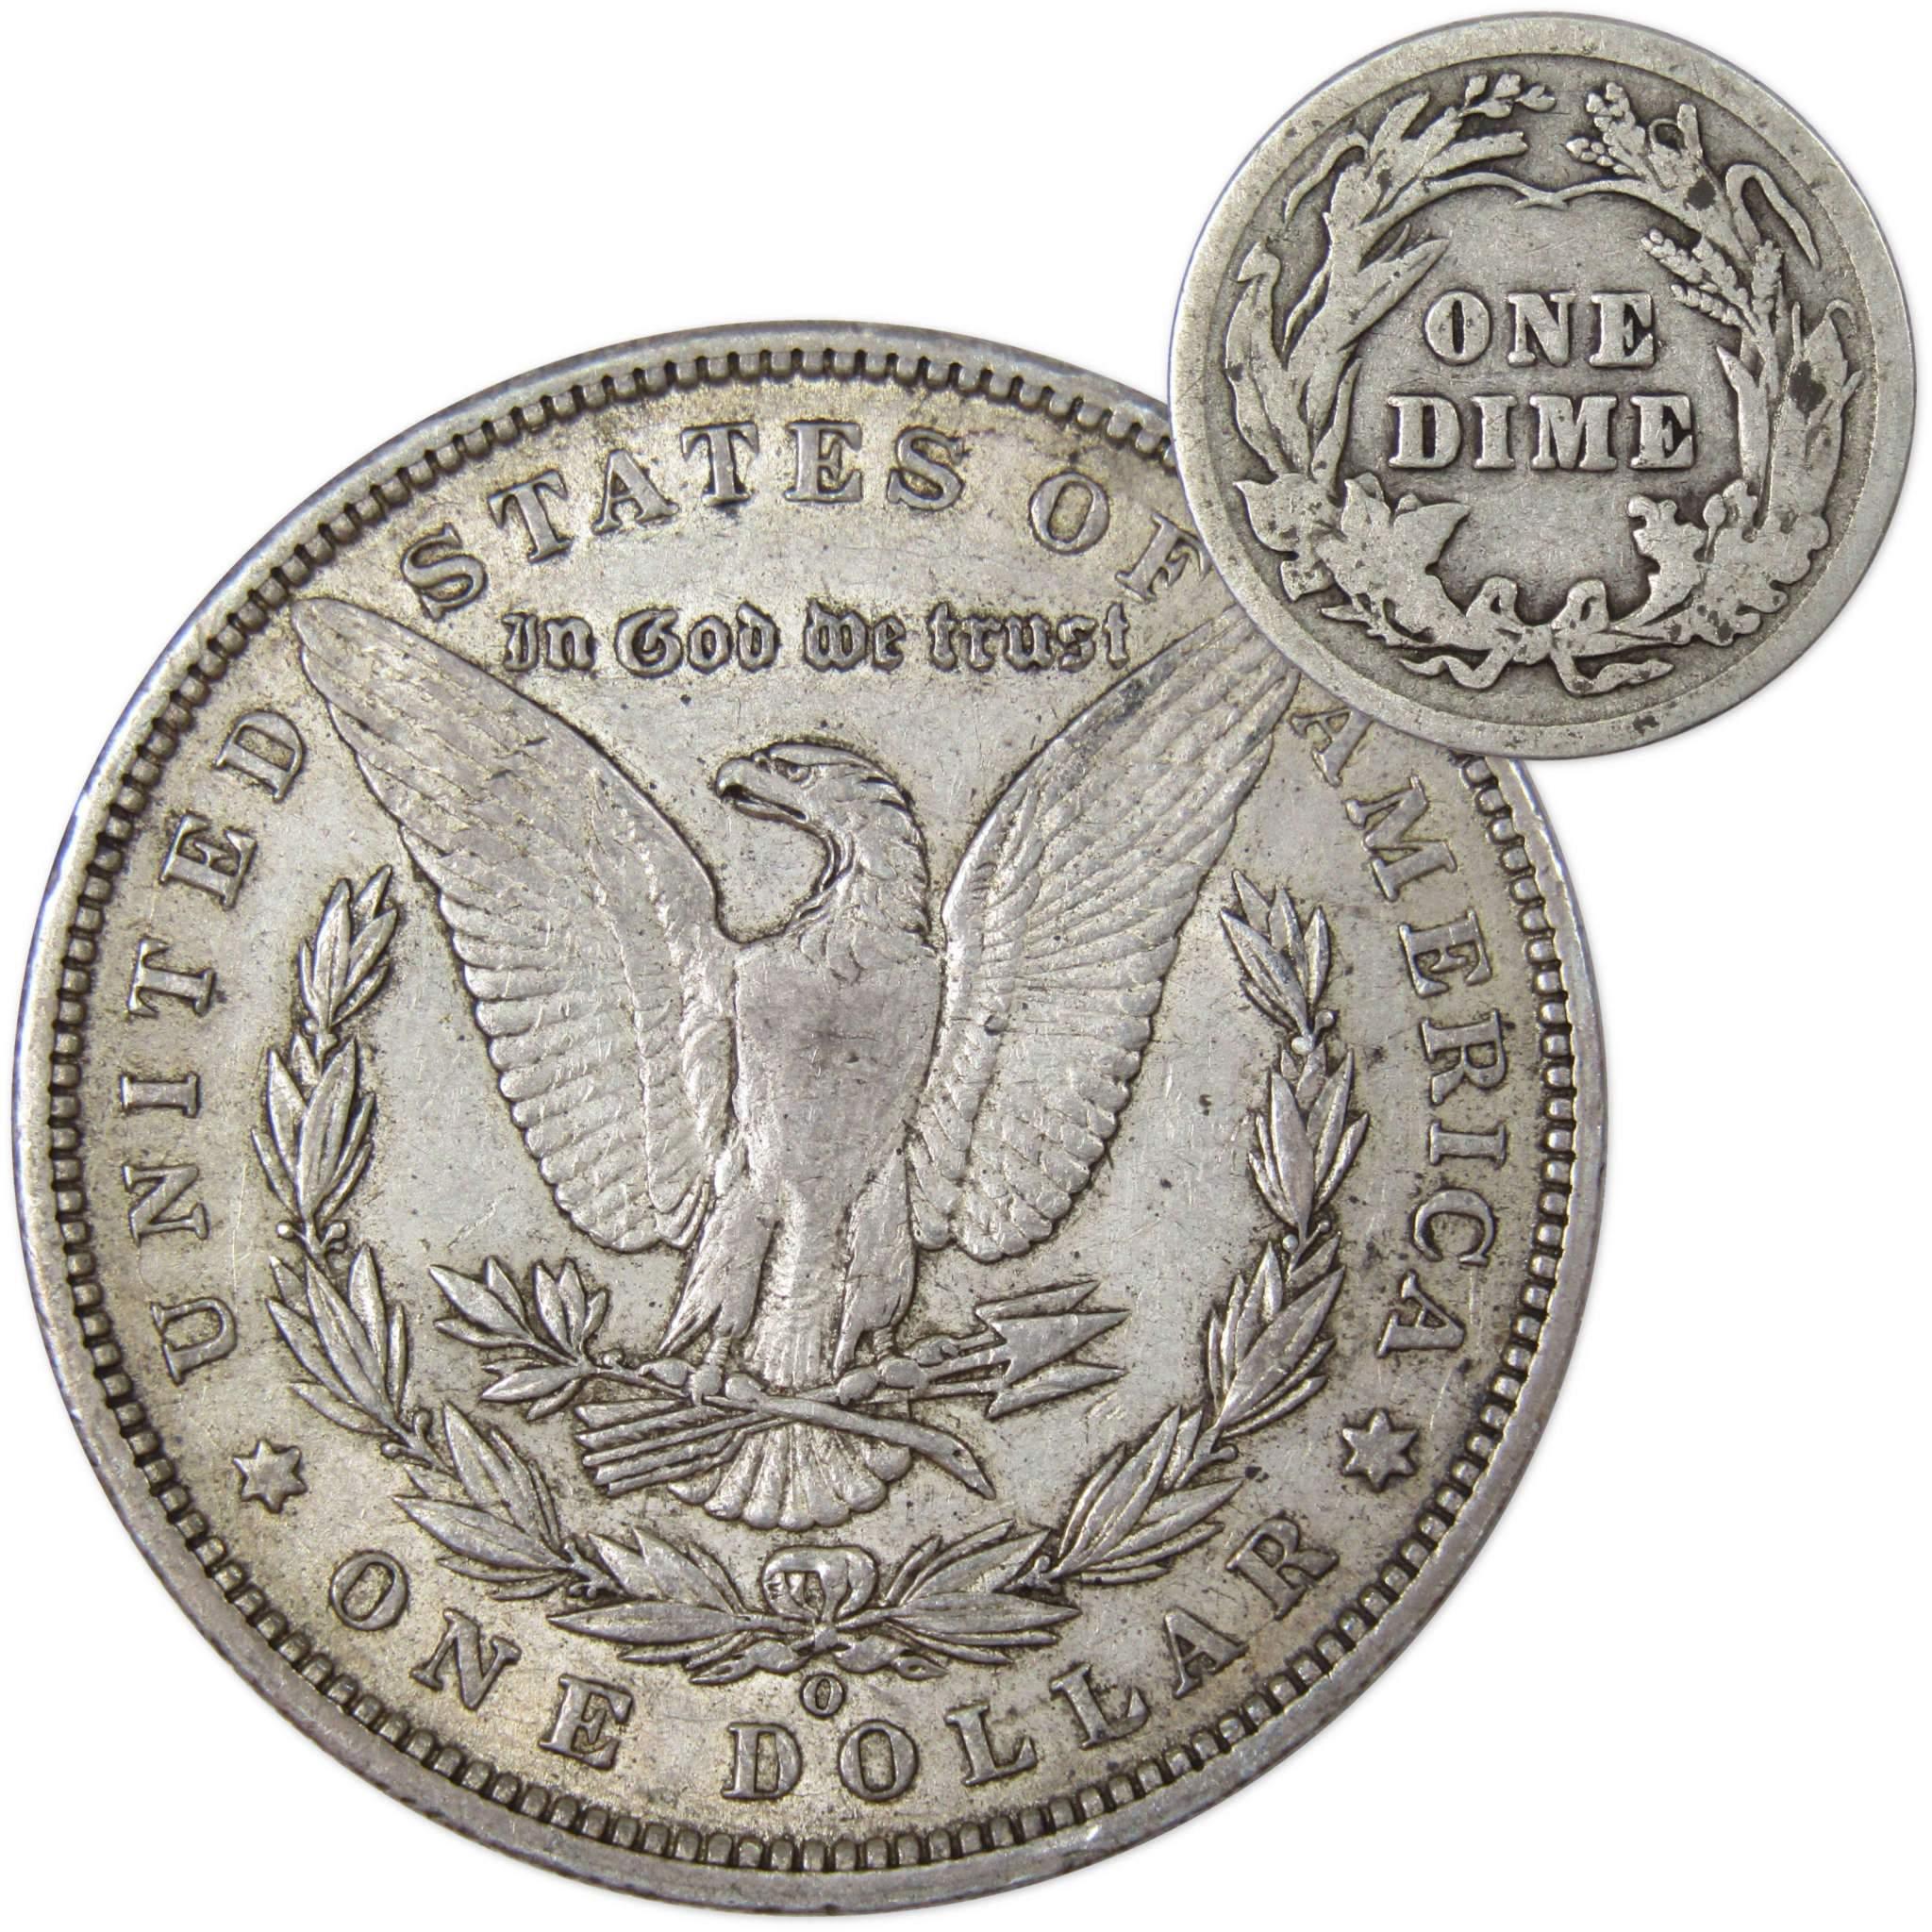 1896 O Morgan Dollar XF EF Extremely Fine with 1916 Barber Dime G Good - Morgan coin - Morgan silver dollar - Morgan silver dollar for sale - Profile Coins &amp; Collectibles